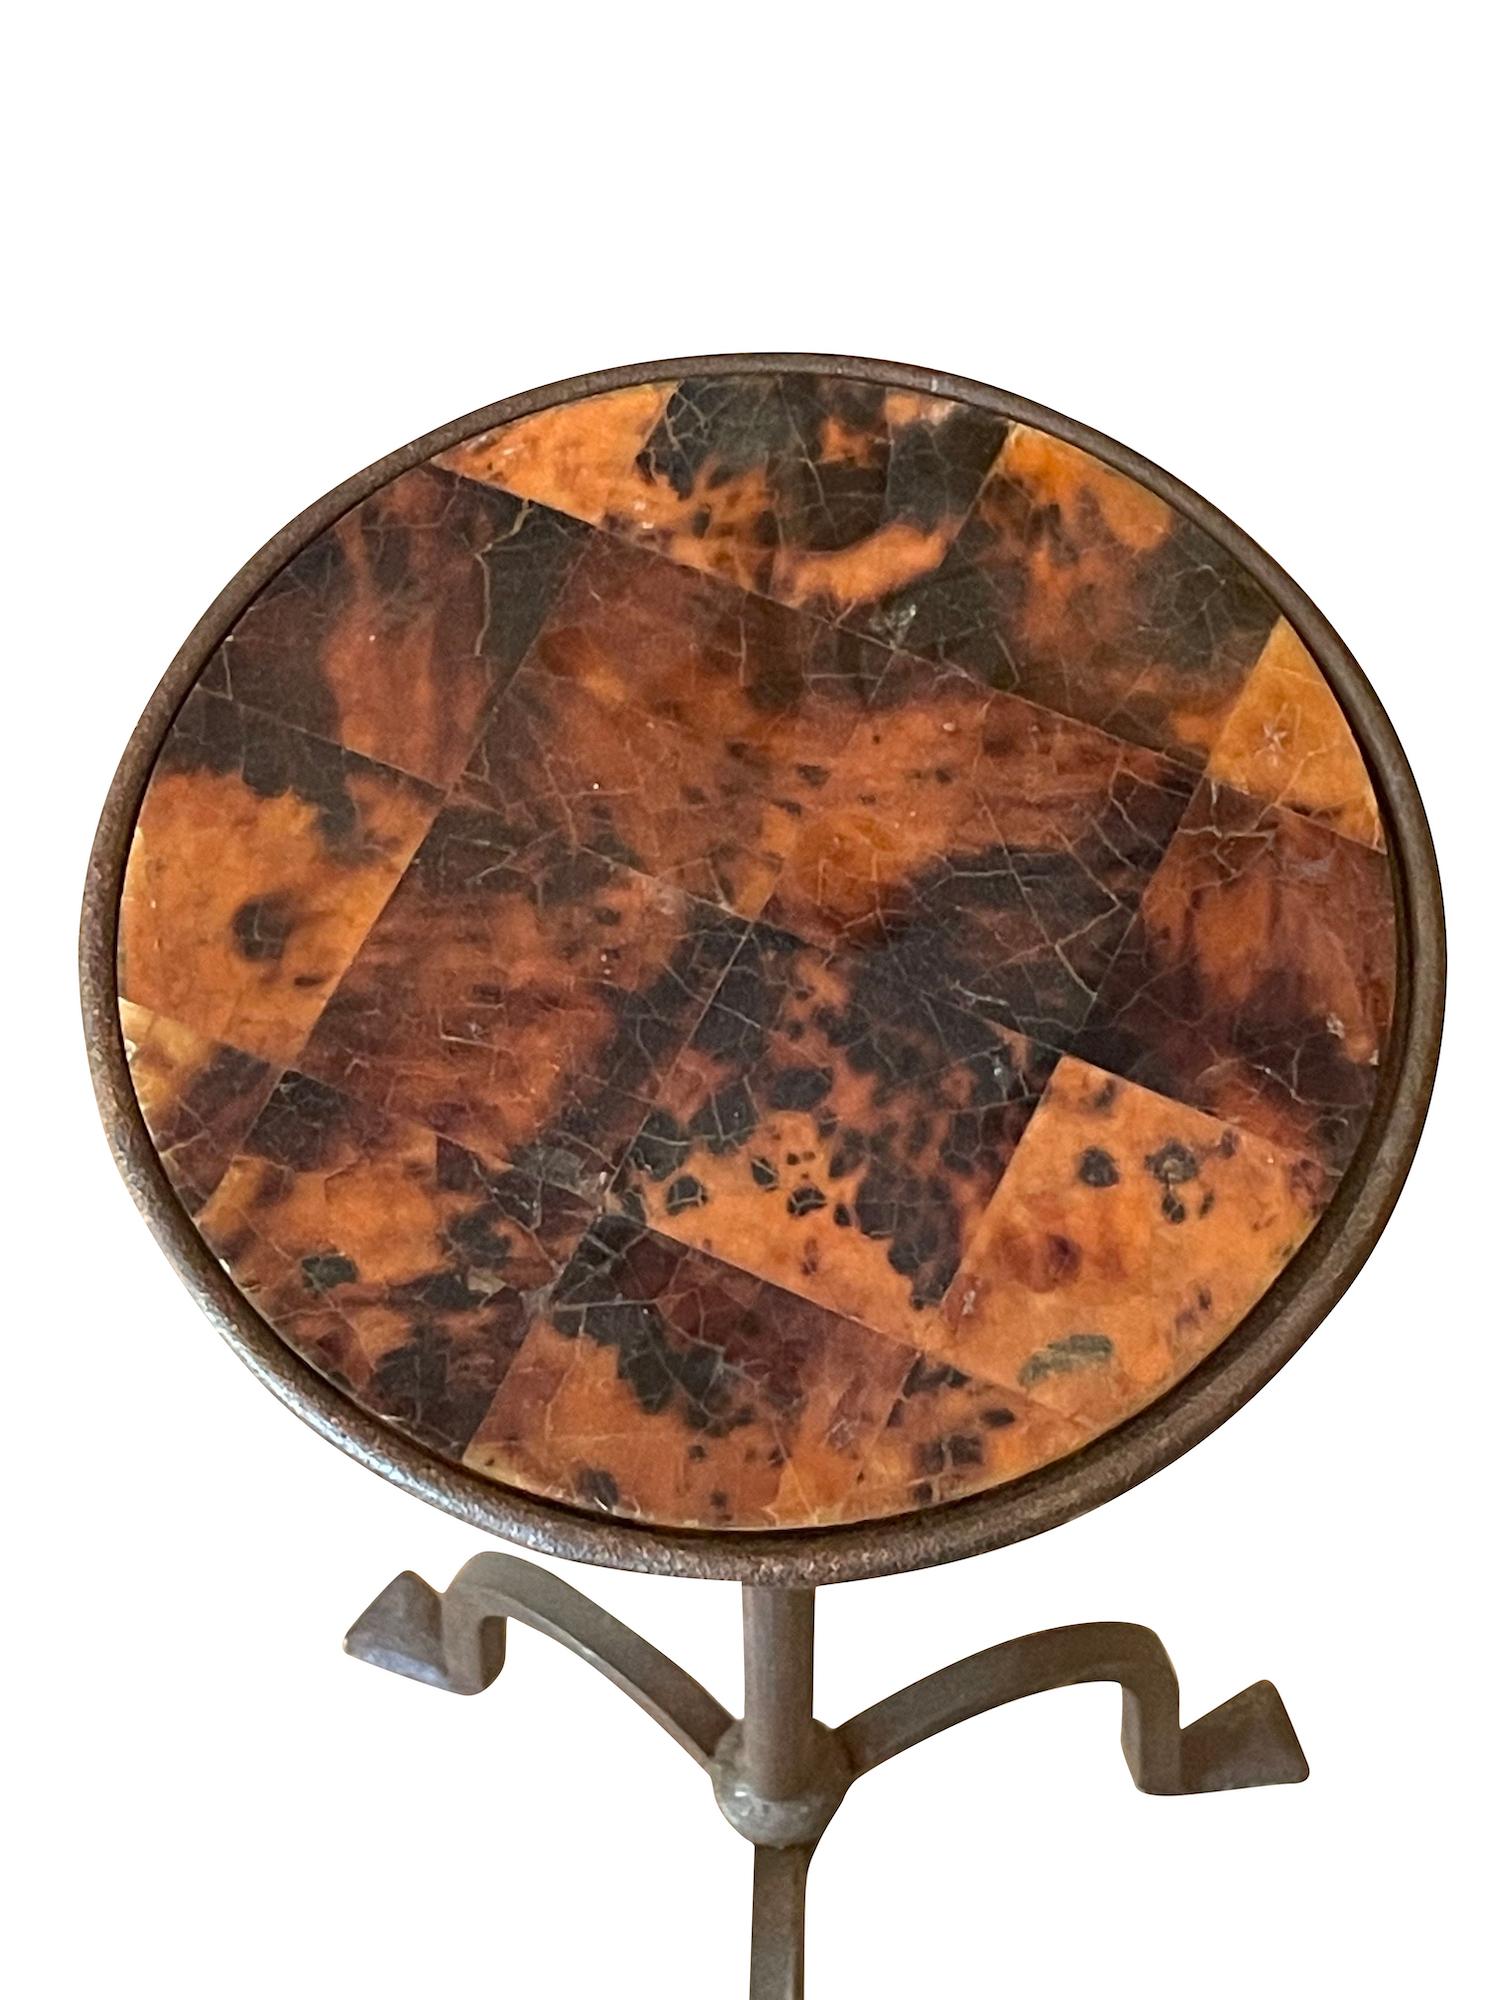 Contemporary Spanish iron tripod leg martini table.
Decorative faux tortoise top.
